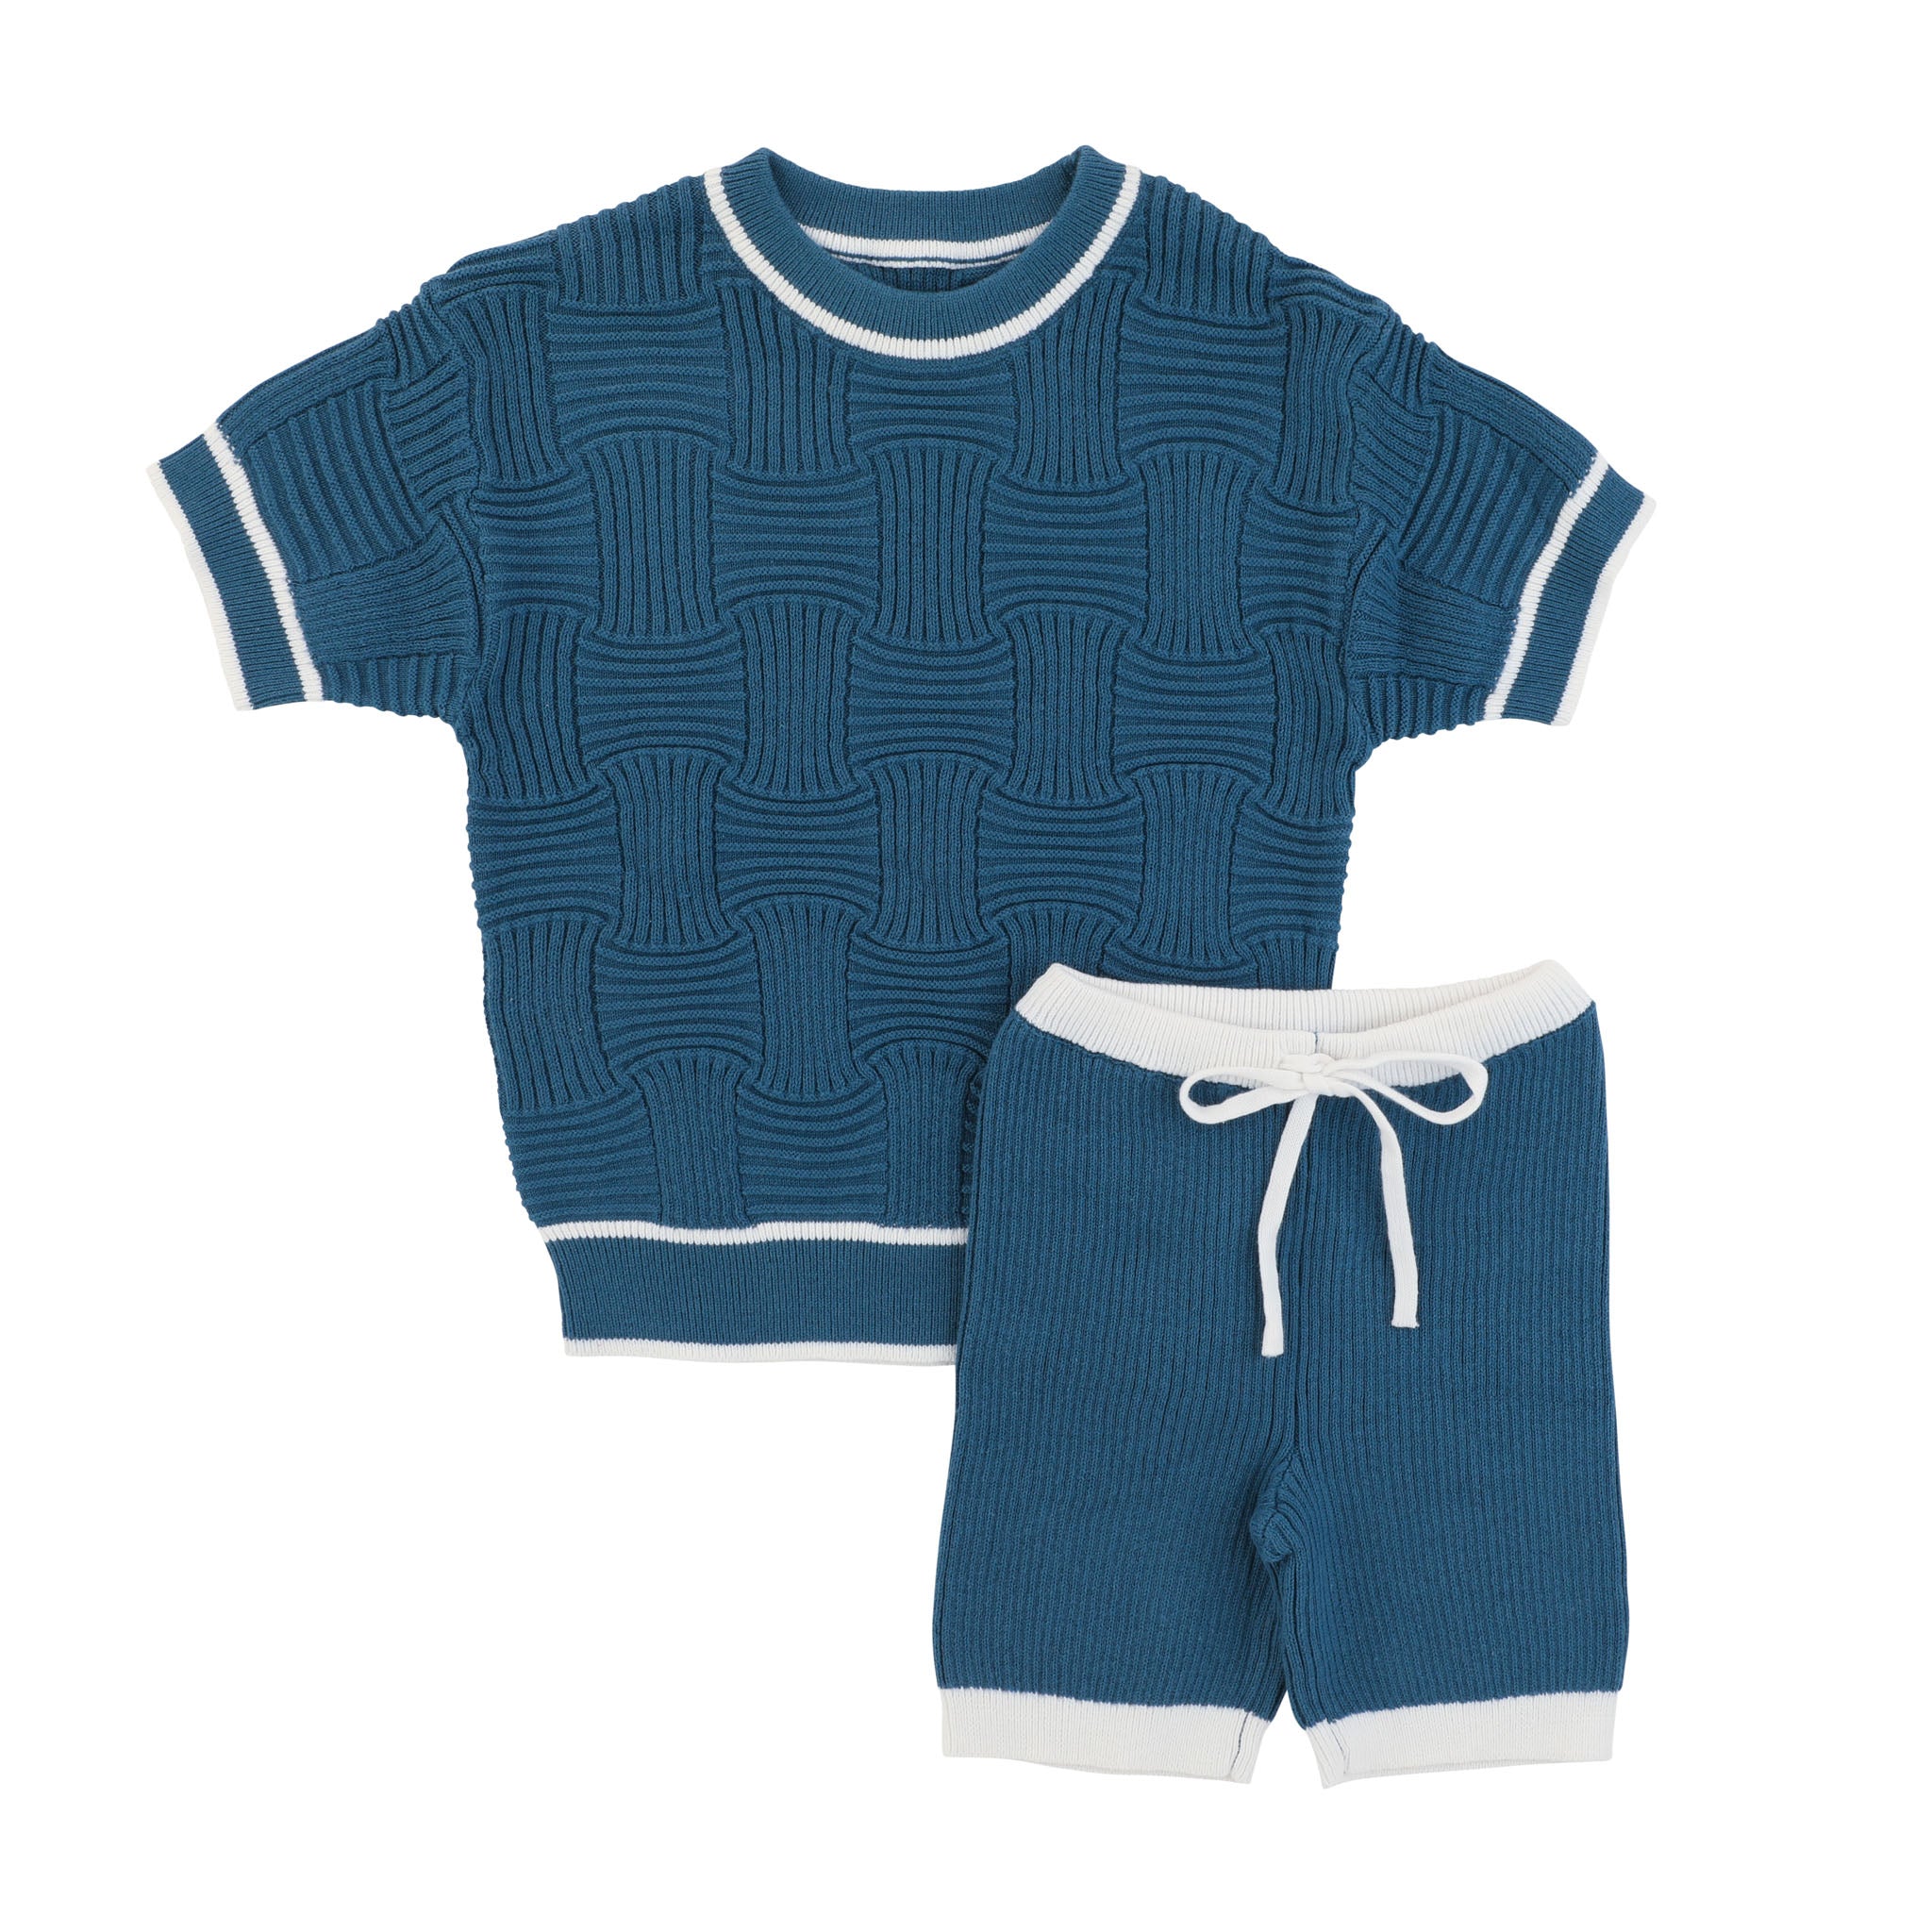 Blue Knit Square Baby Set